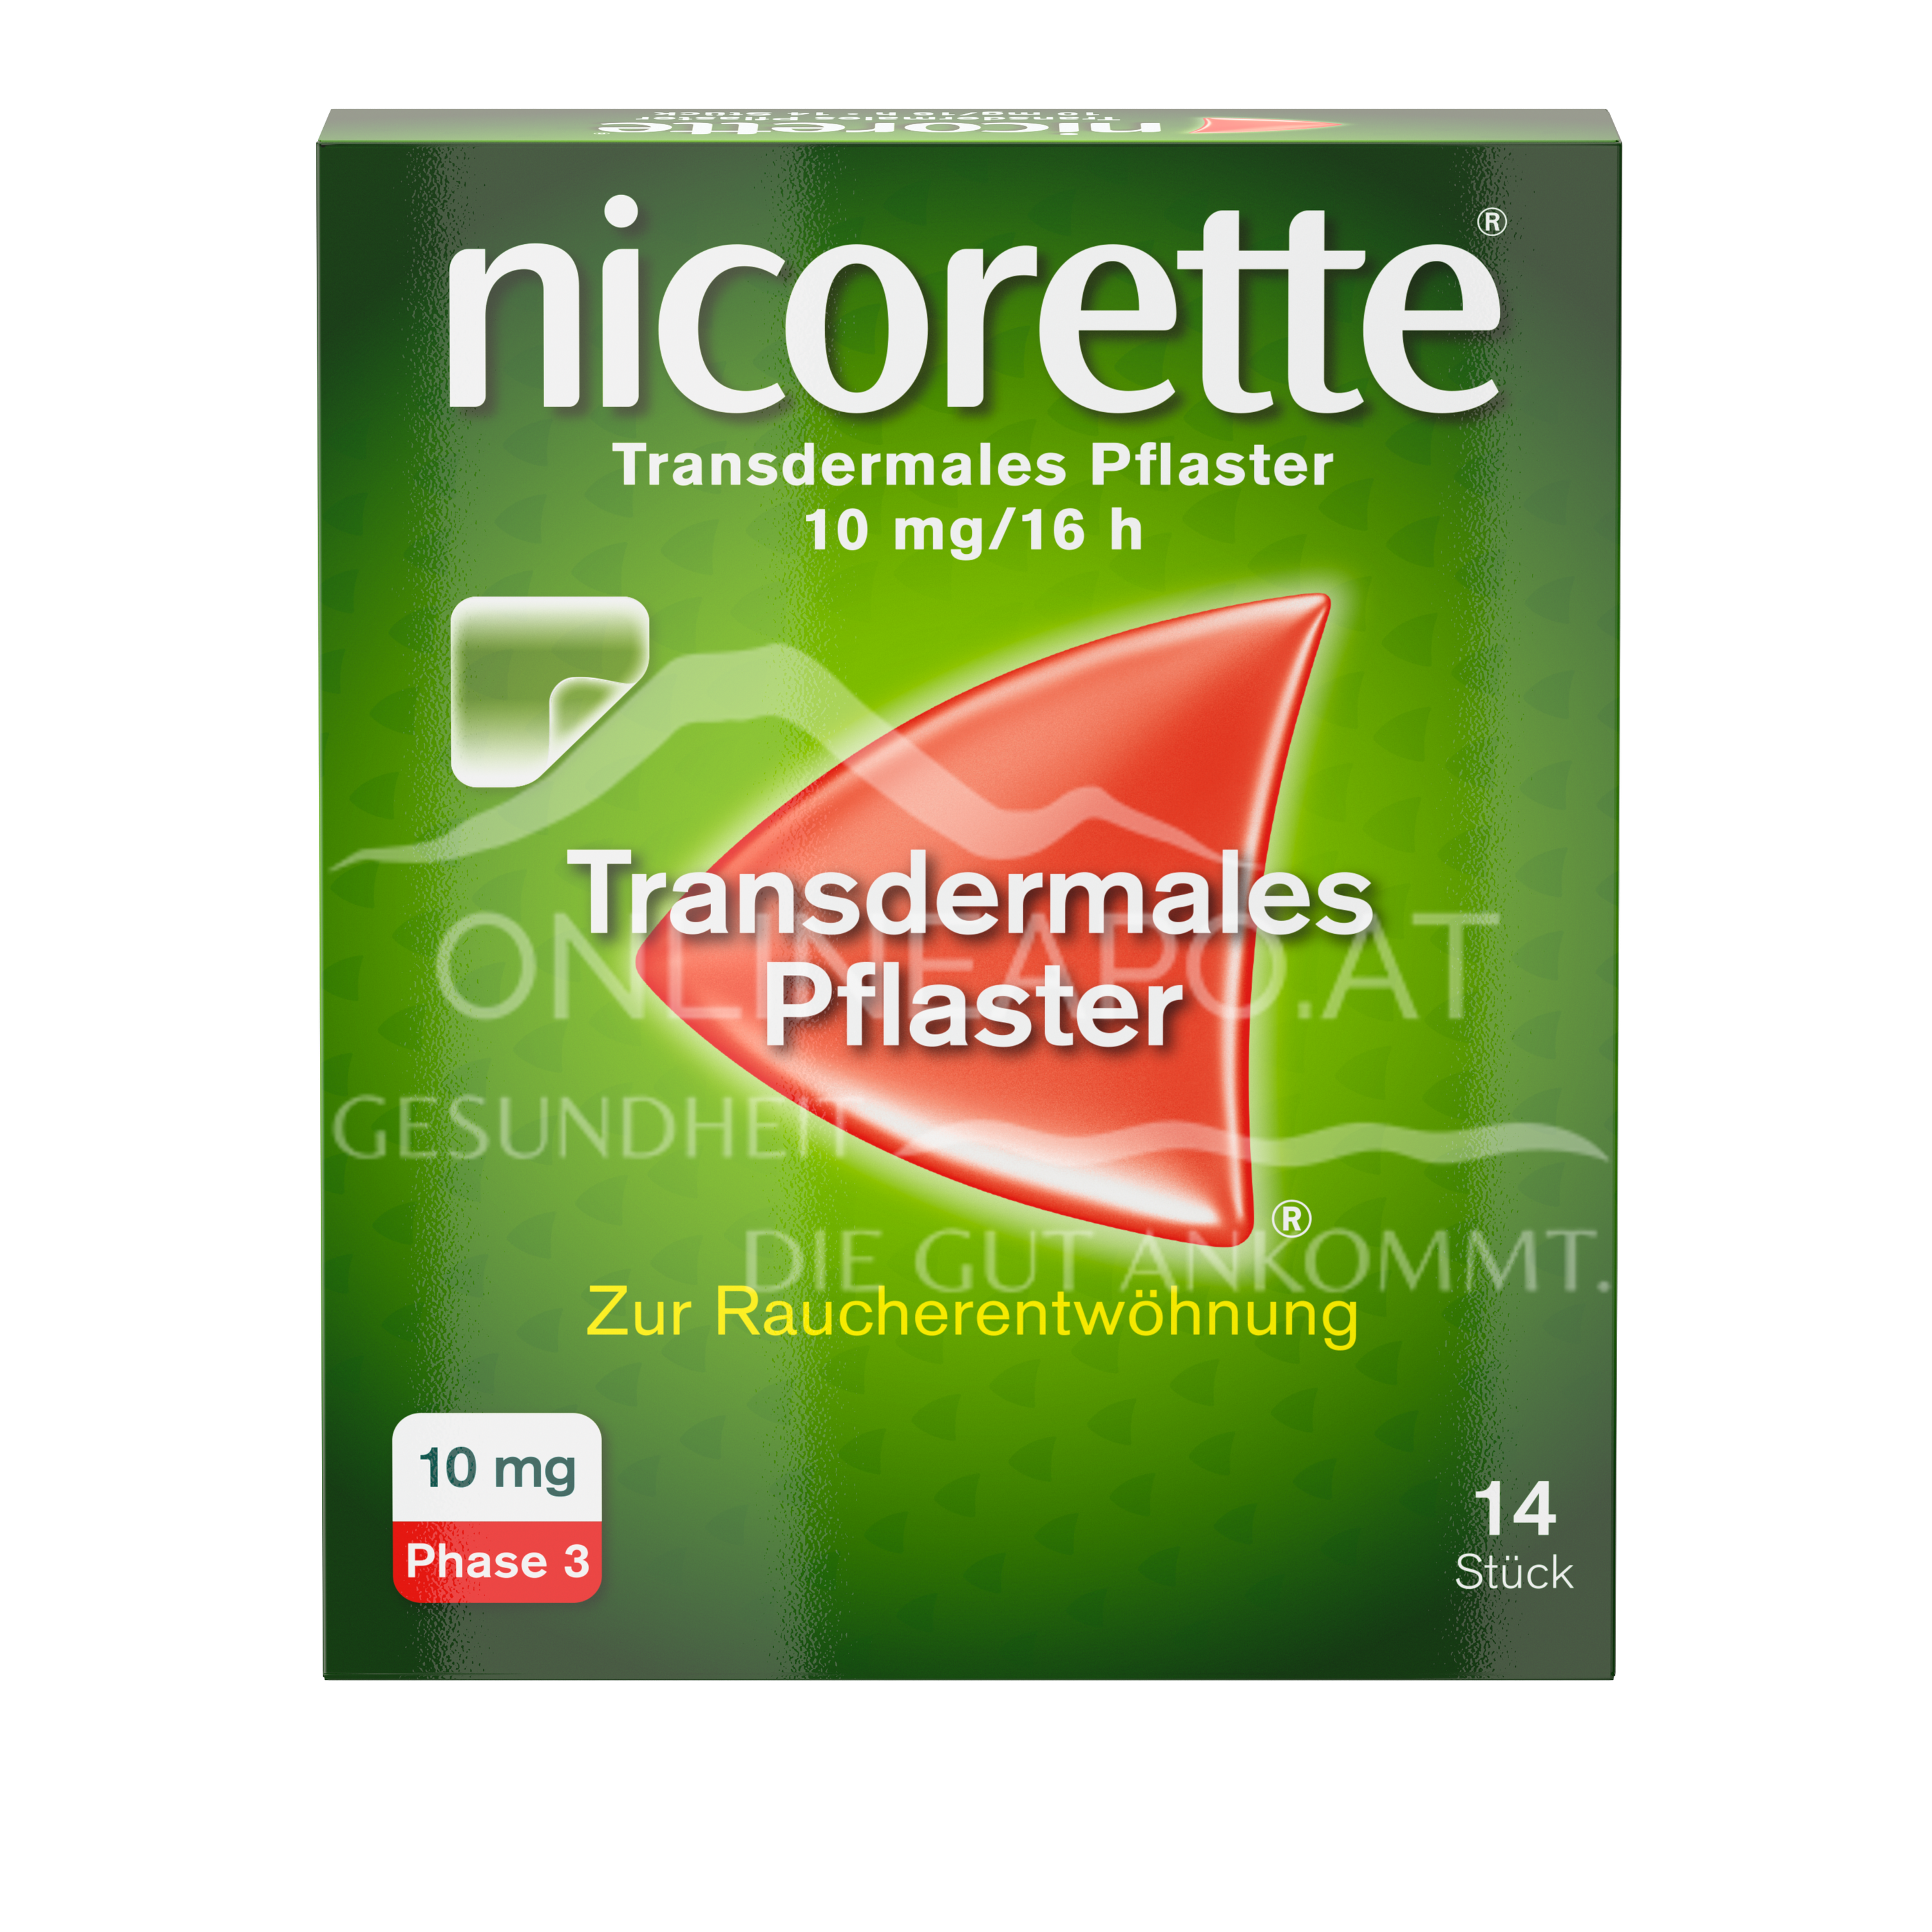 Nicorette 10 mg/16 h – transdermales Pflaster